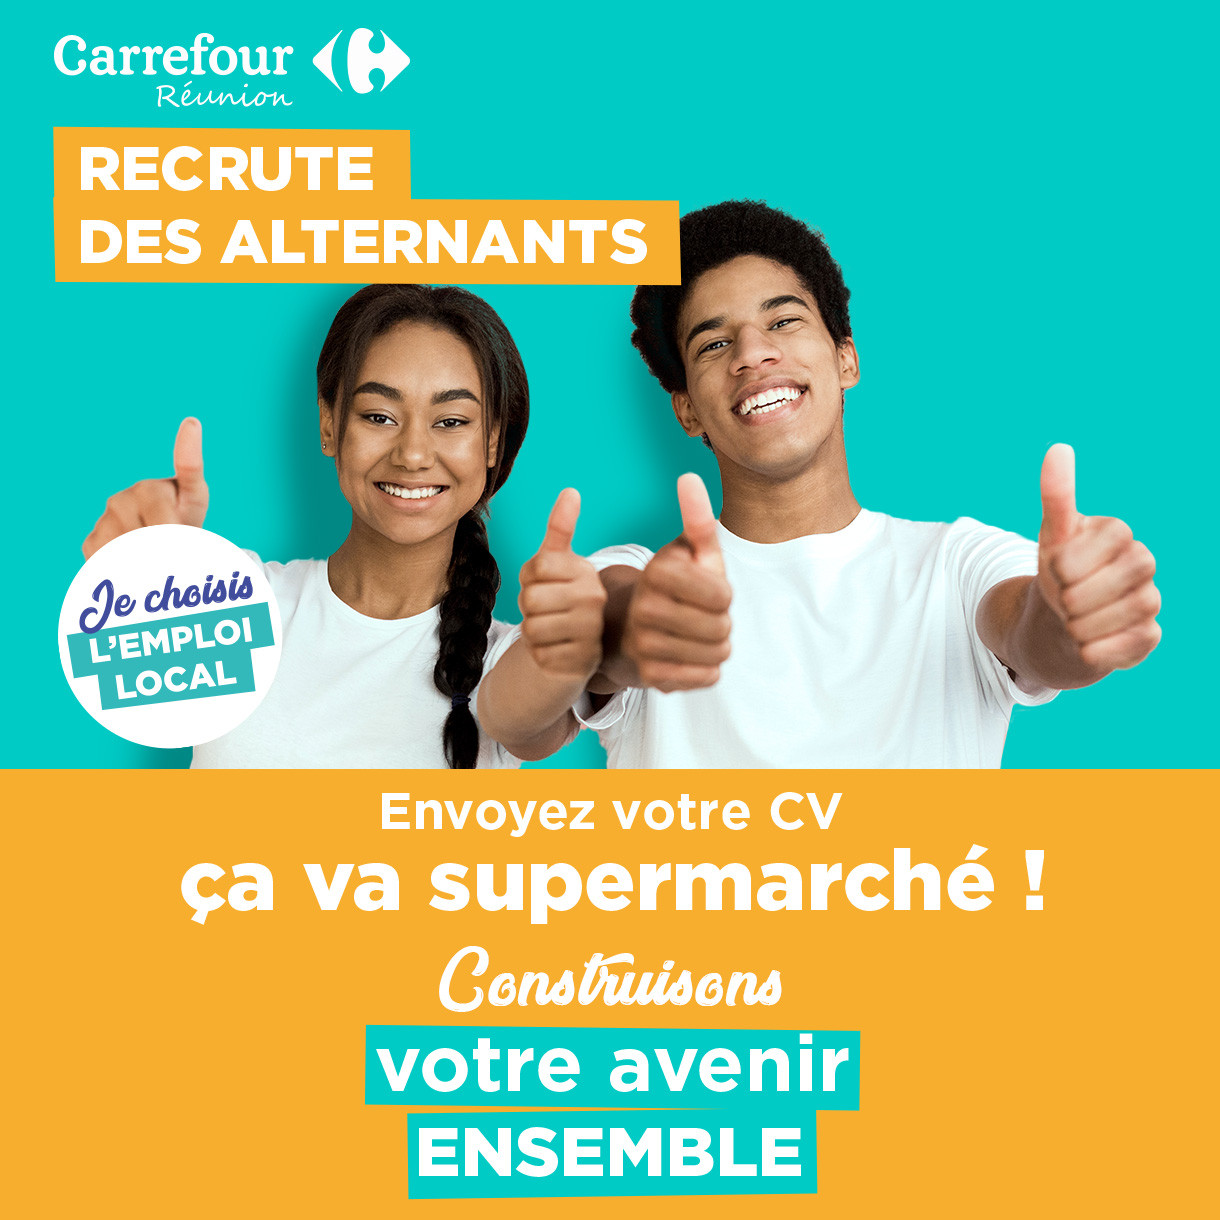 Carrefour recrute des alternants